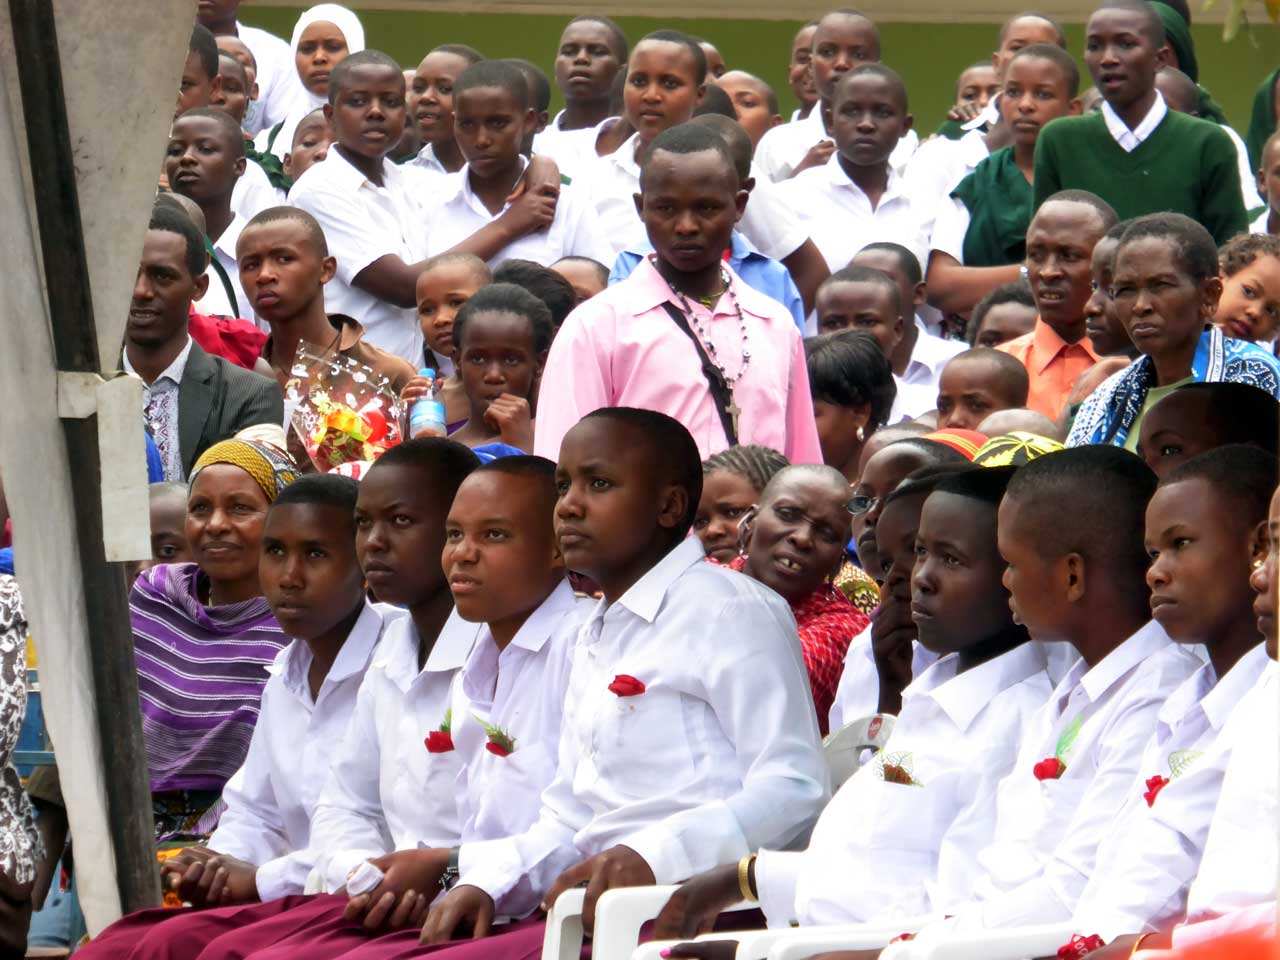 Students at Mwandet graduation